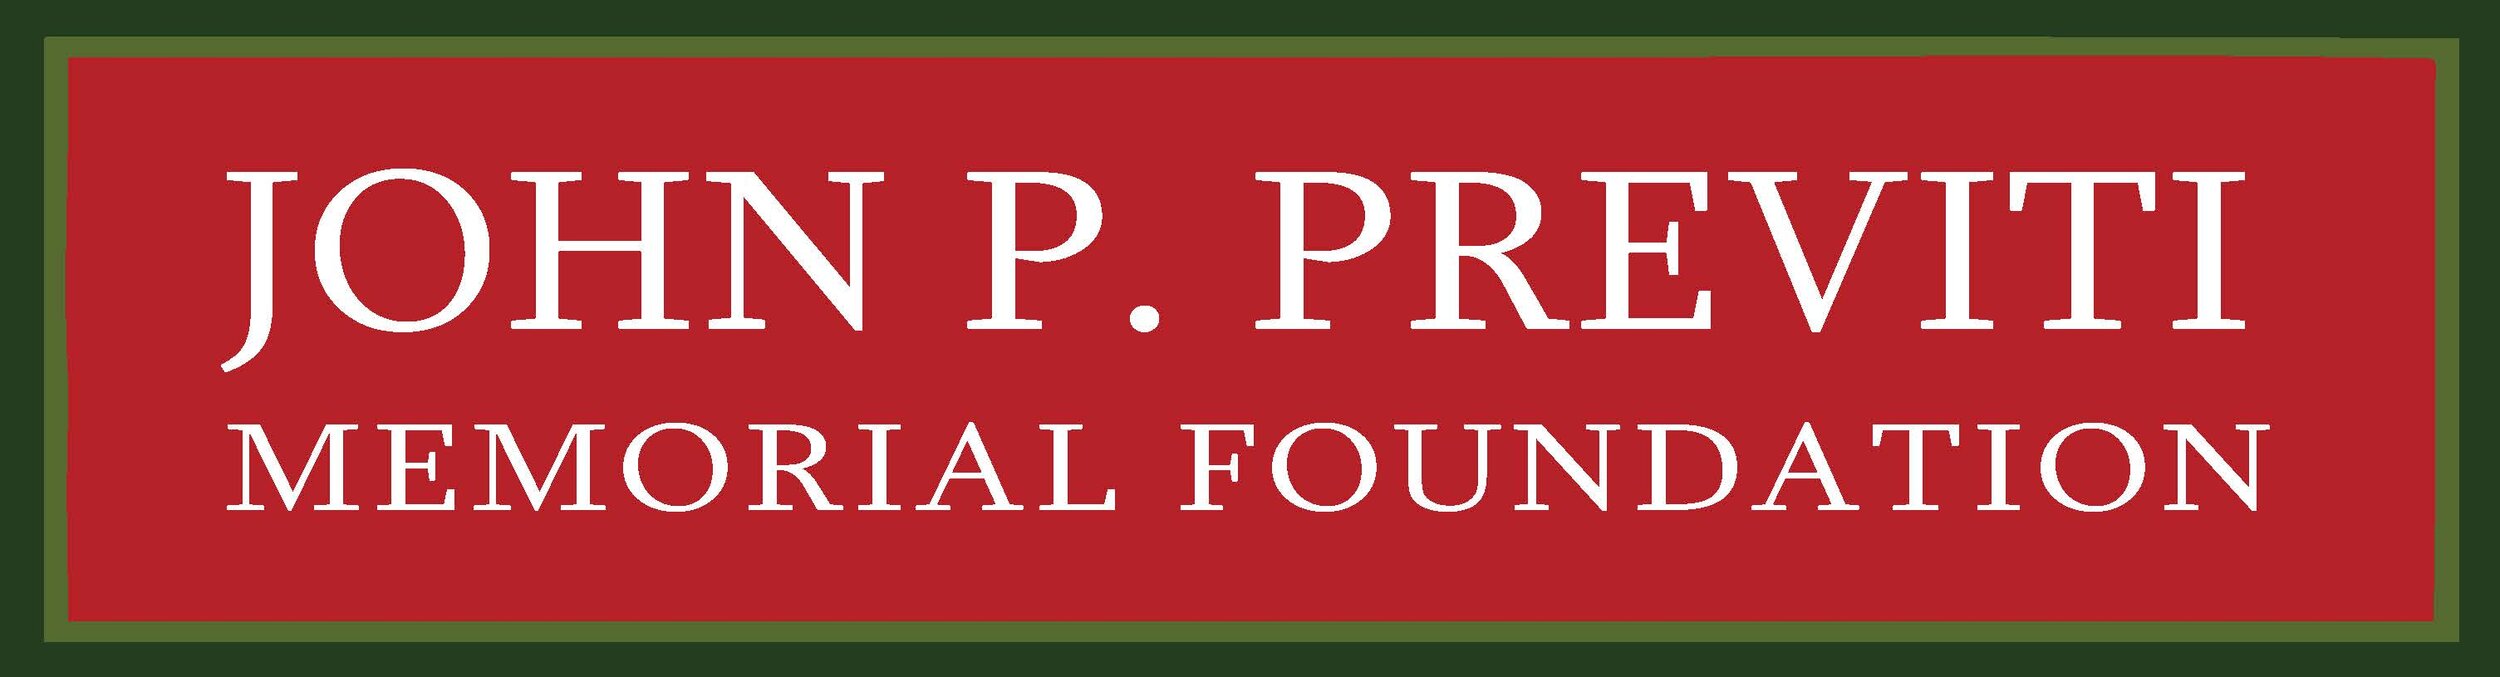 John P. Previti FoundationLogo.jpg